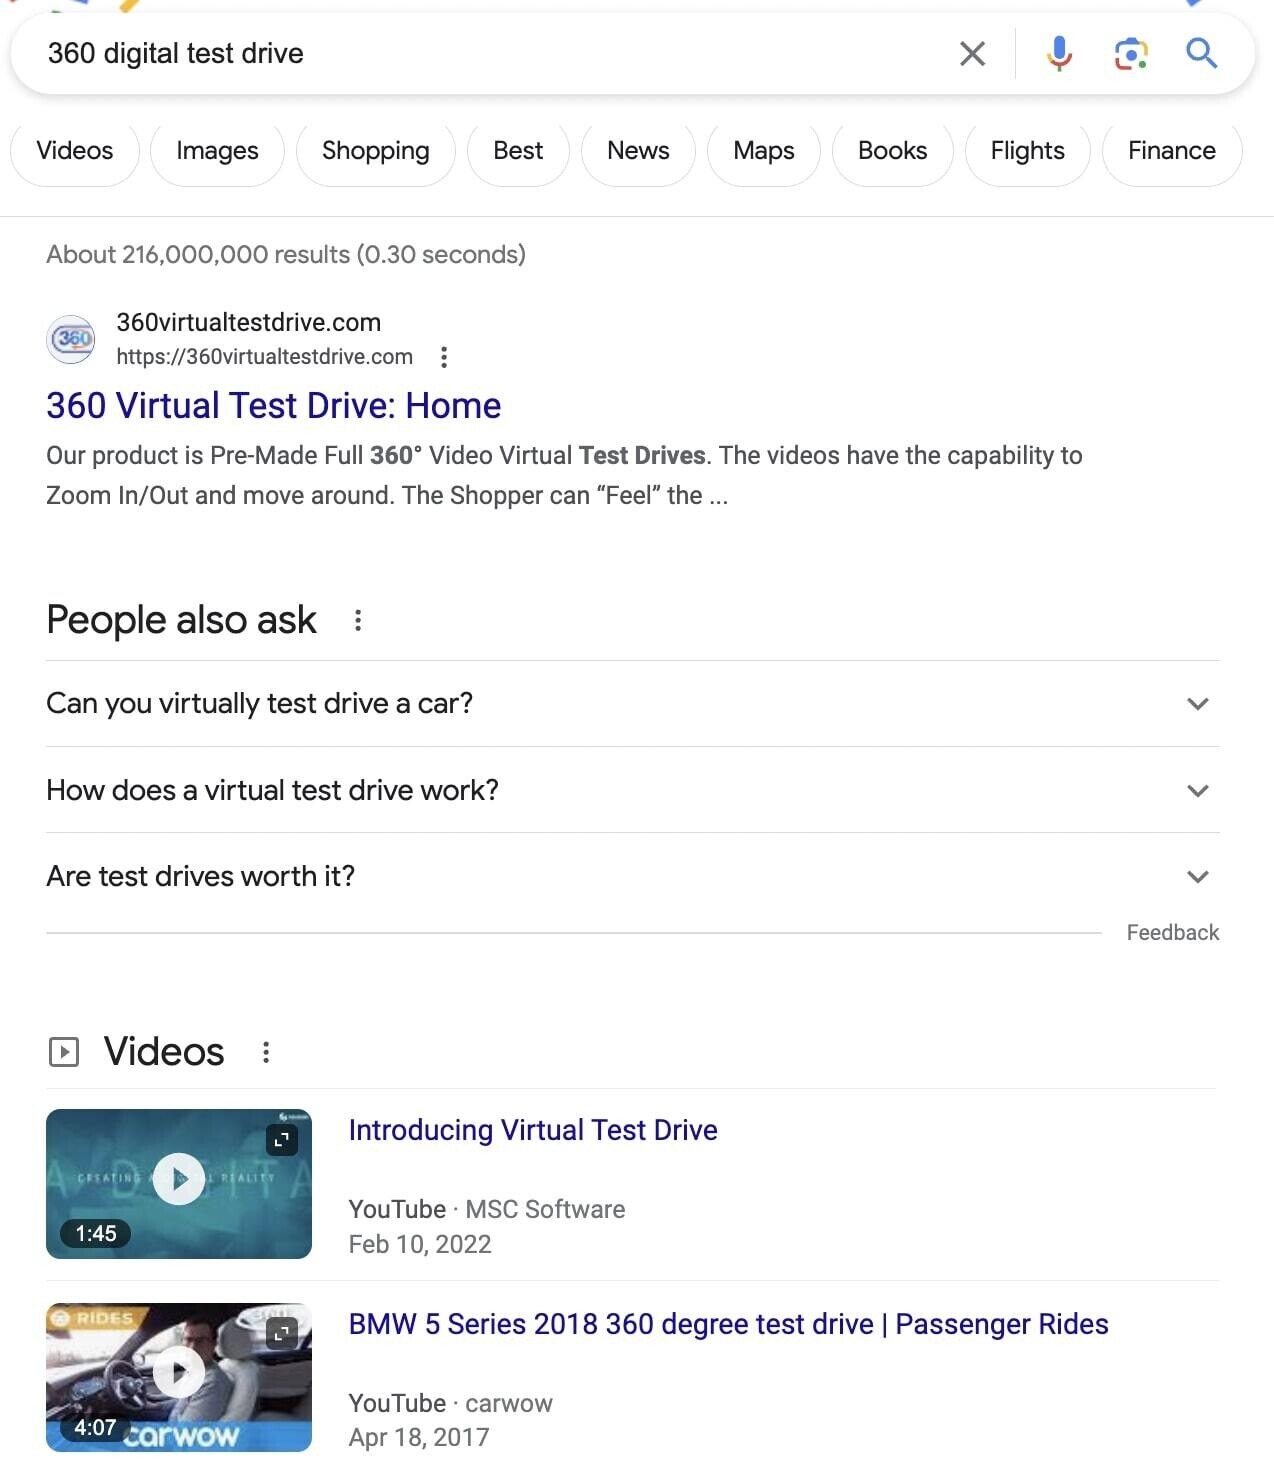 Google SERP for "360 digital test drive" query